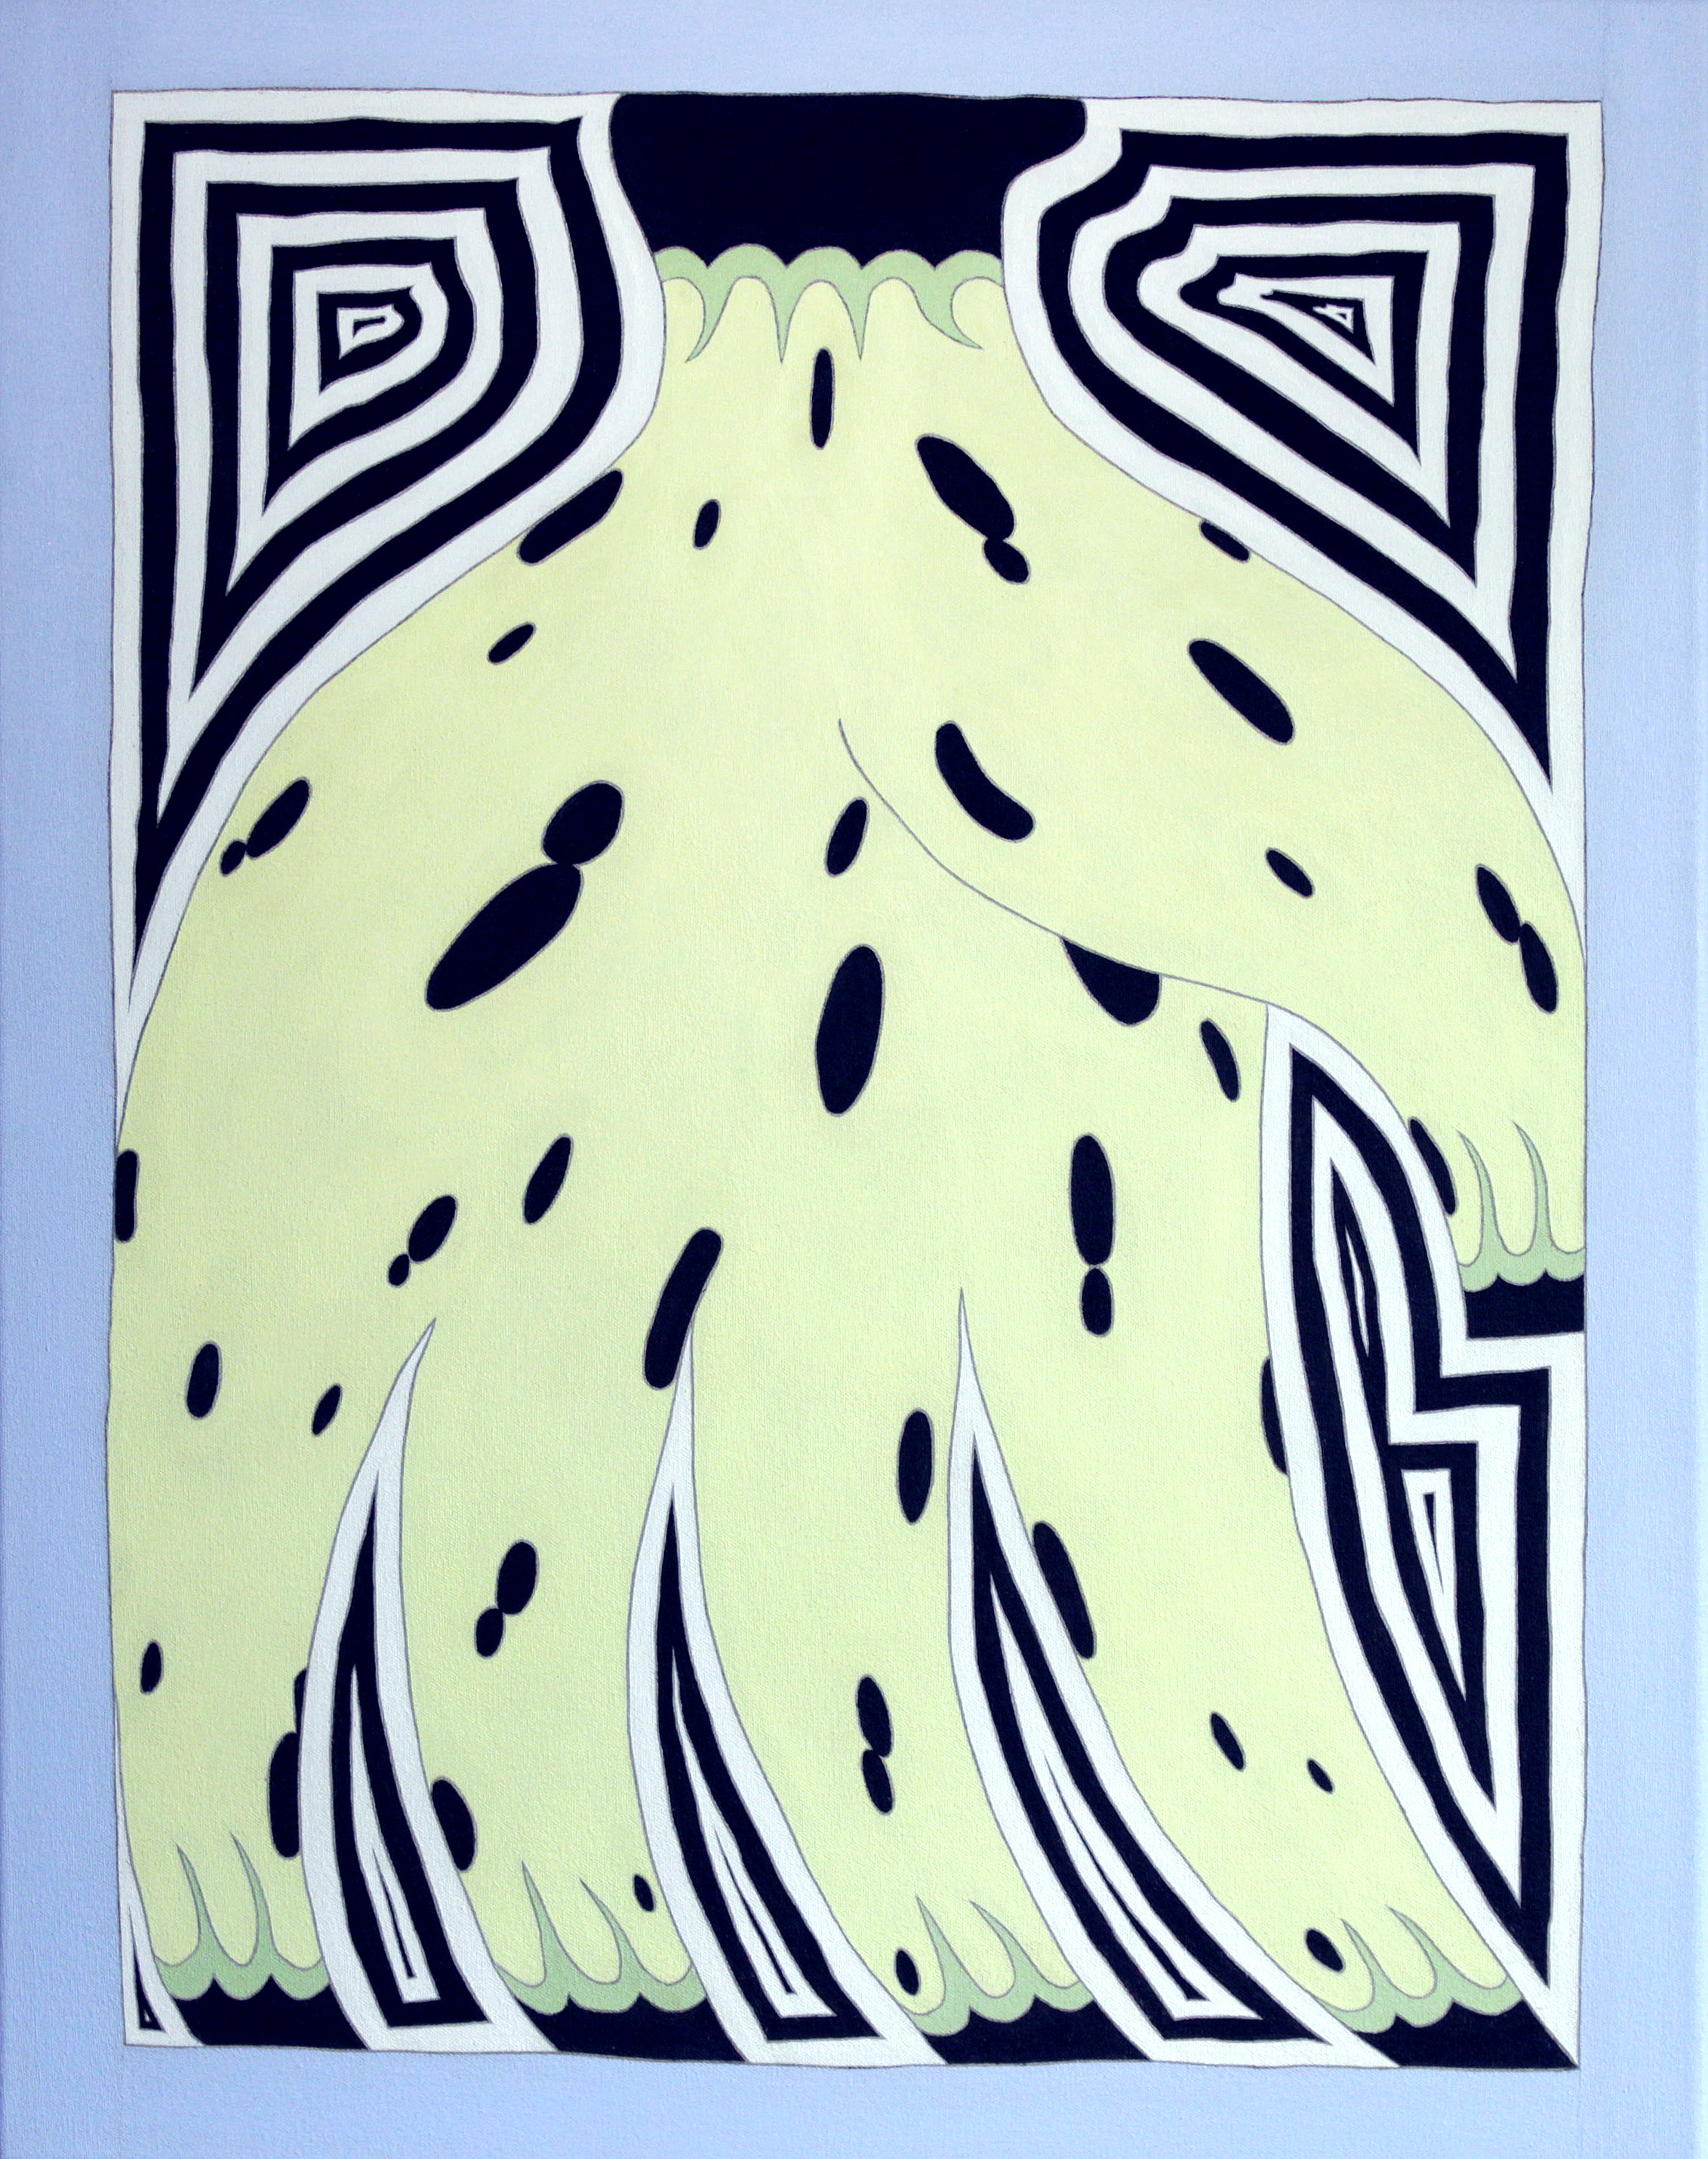 David Onri Anderson, Bananaphant, 2020, walnut ink, acrylic, and graphite on raw canvas, 22" x 28"